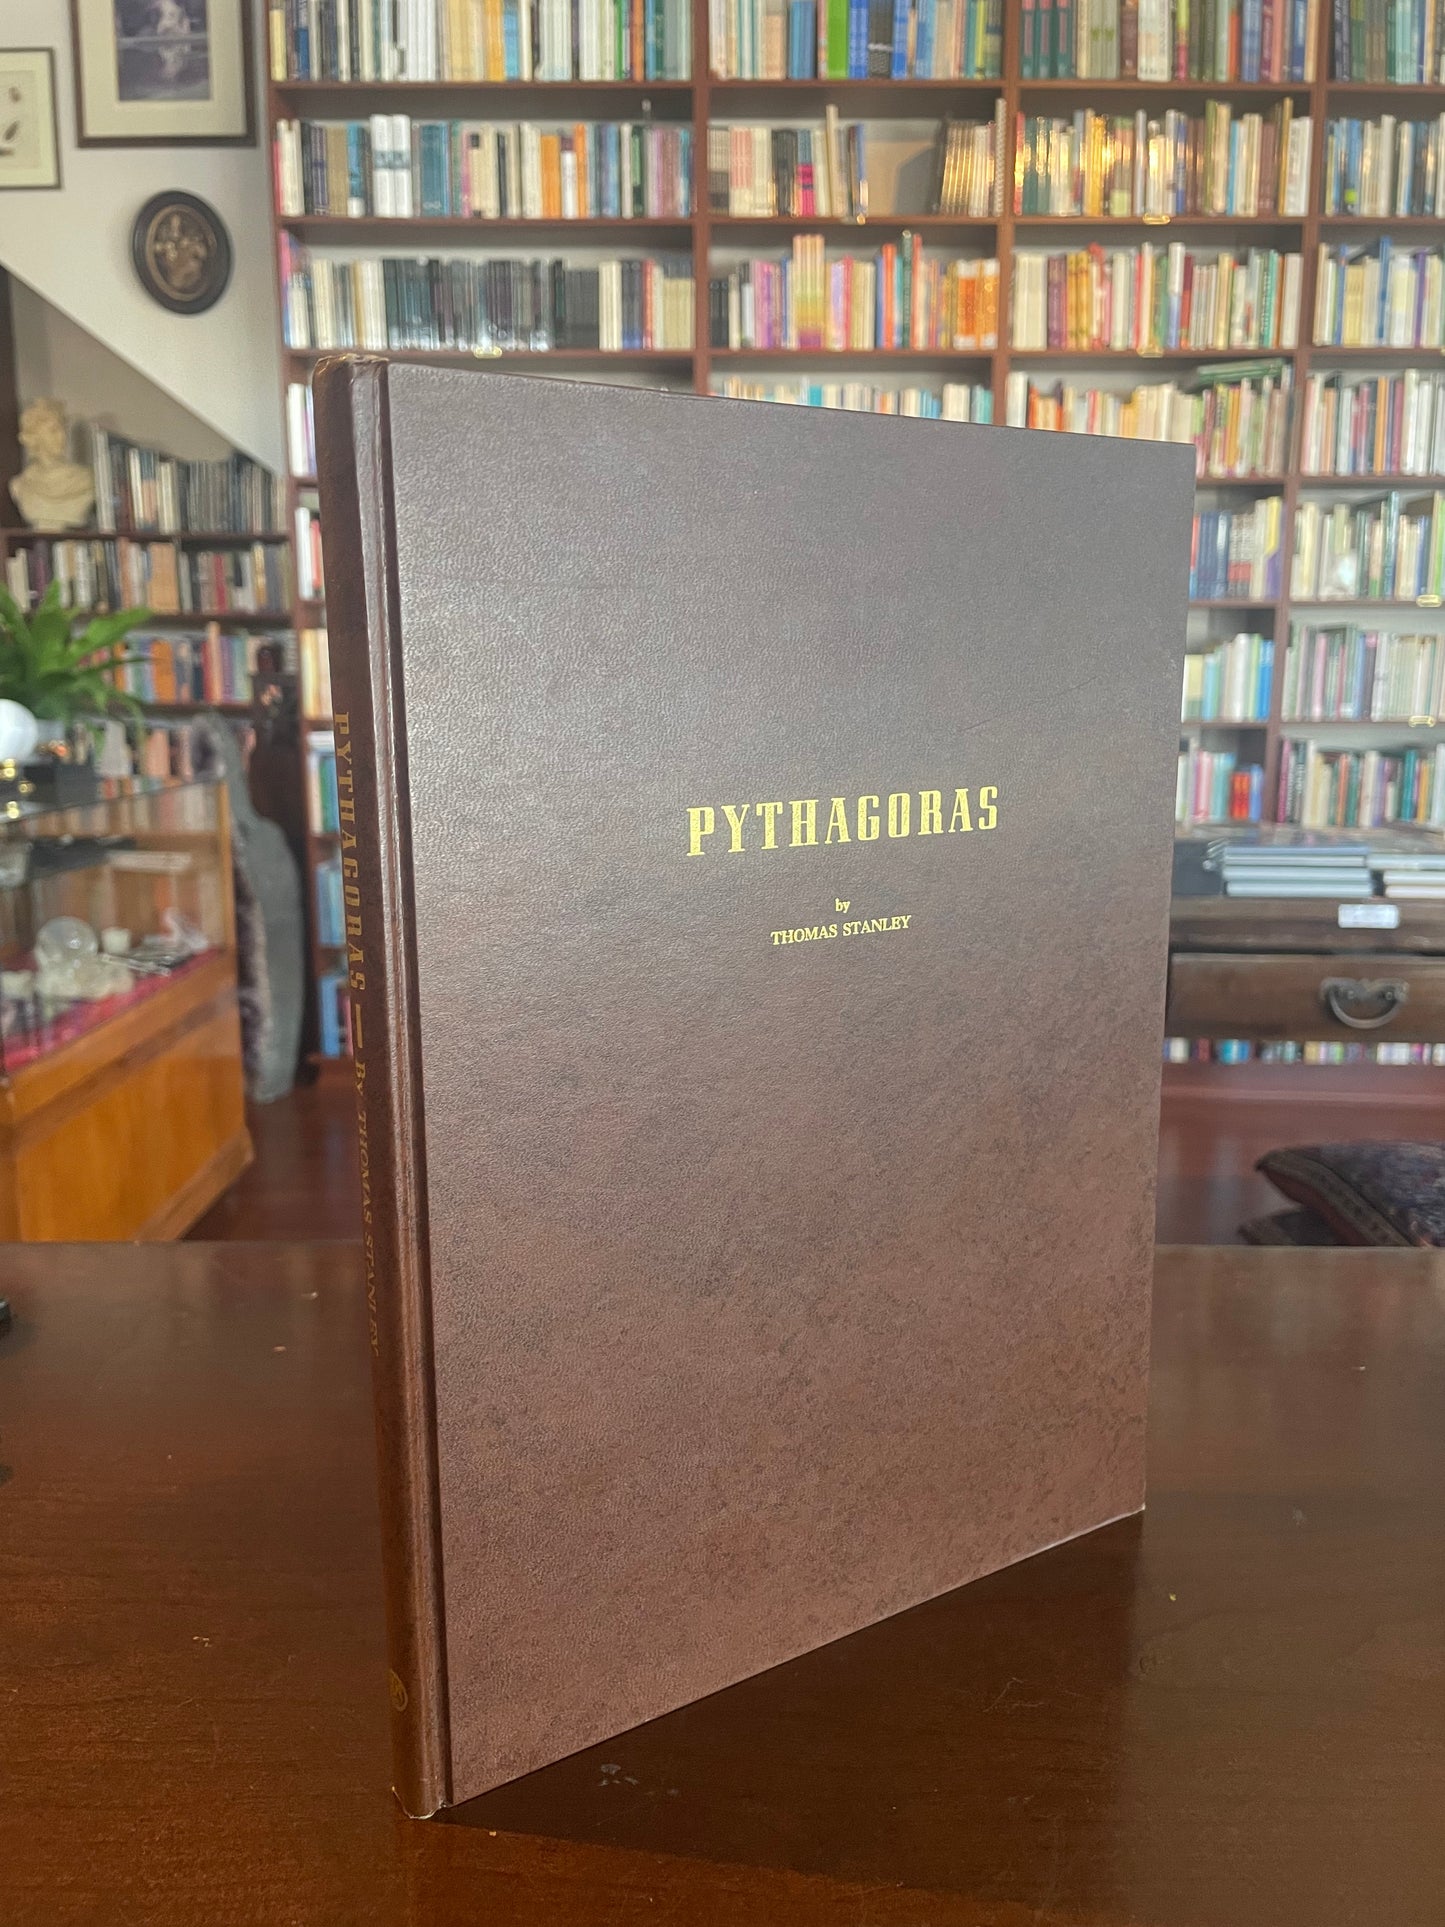 Pythagoras by Thomas Stanley (new)